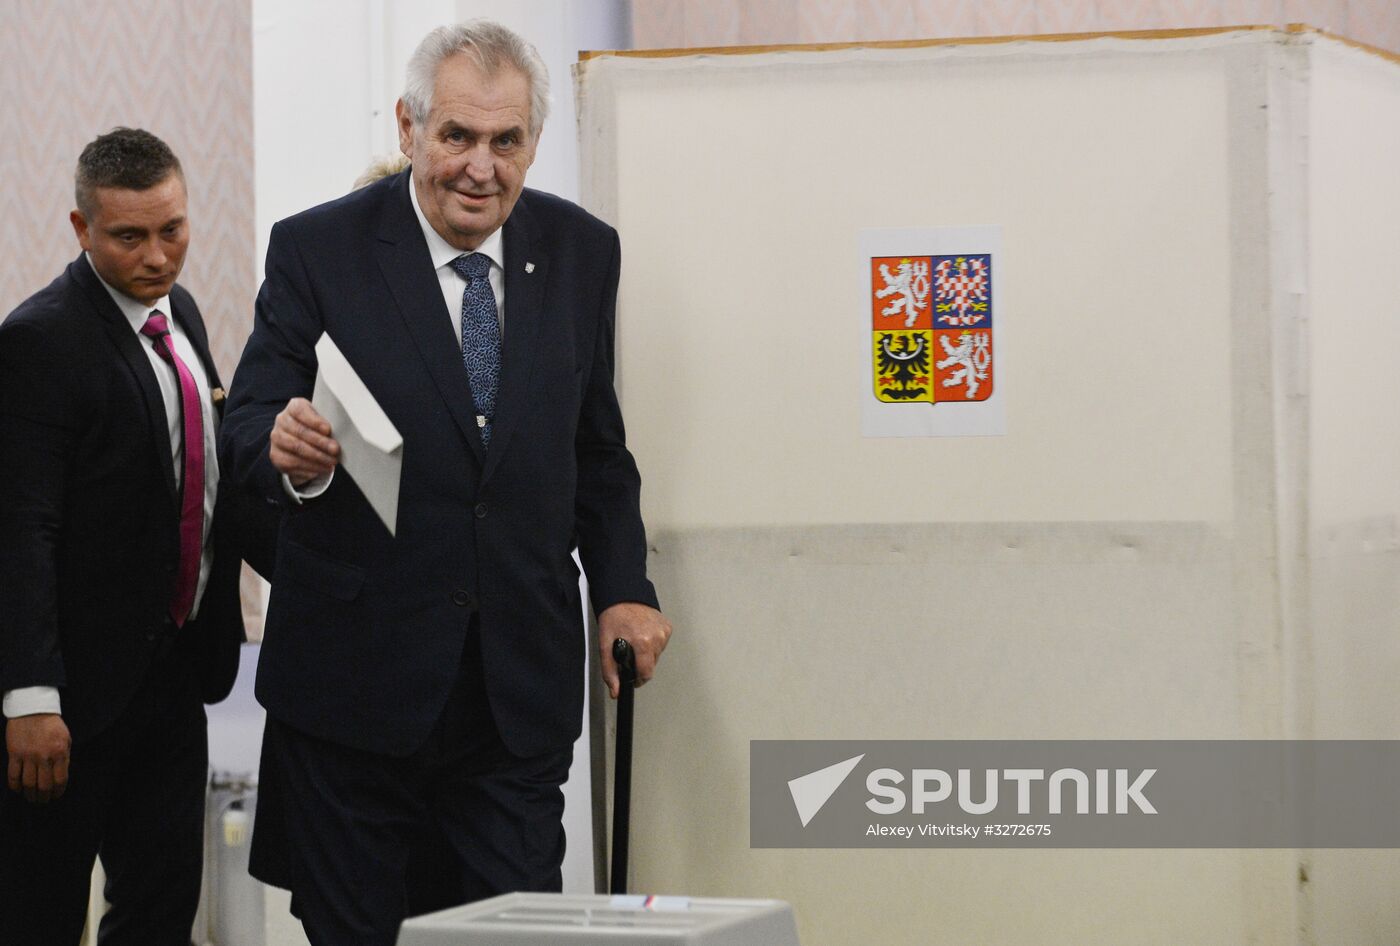 Presidential elections in Czech Republic